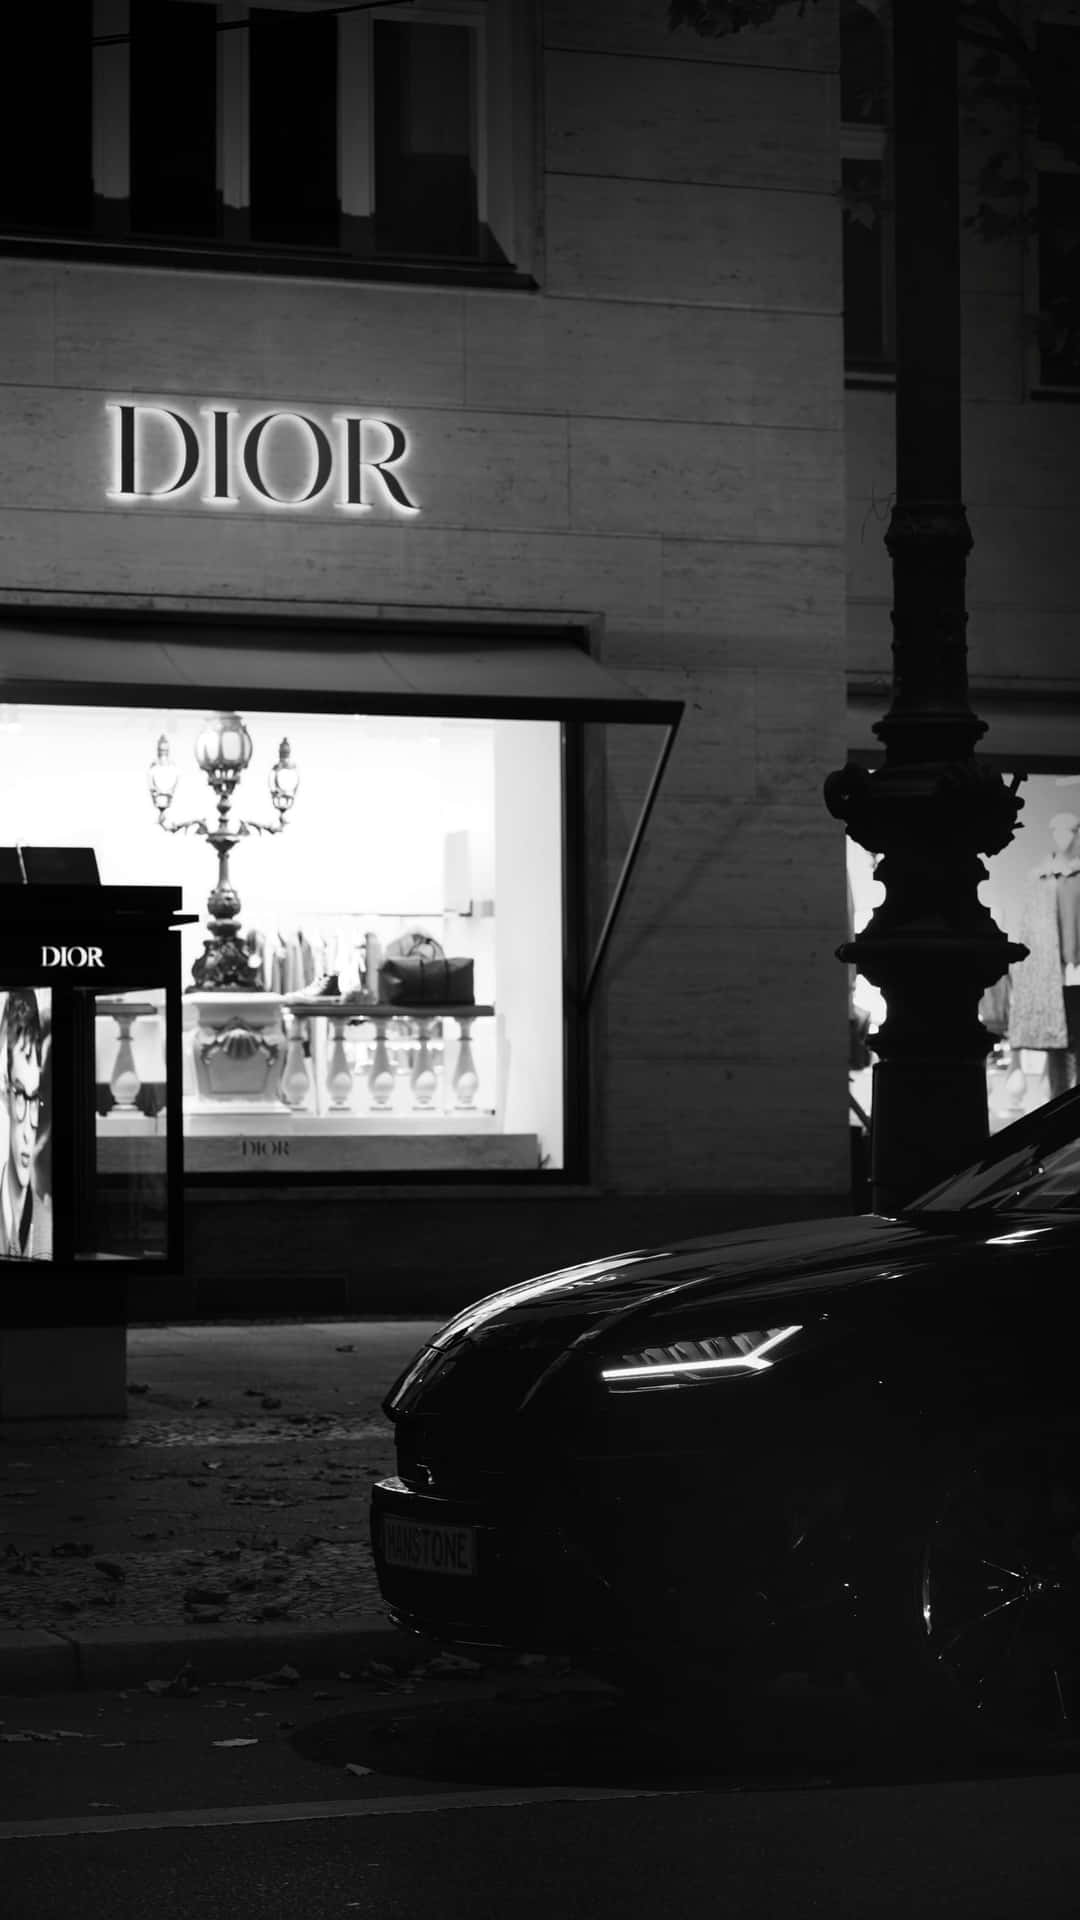 Dior Storefront Night Scene Wallpaper